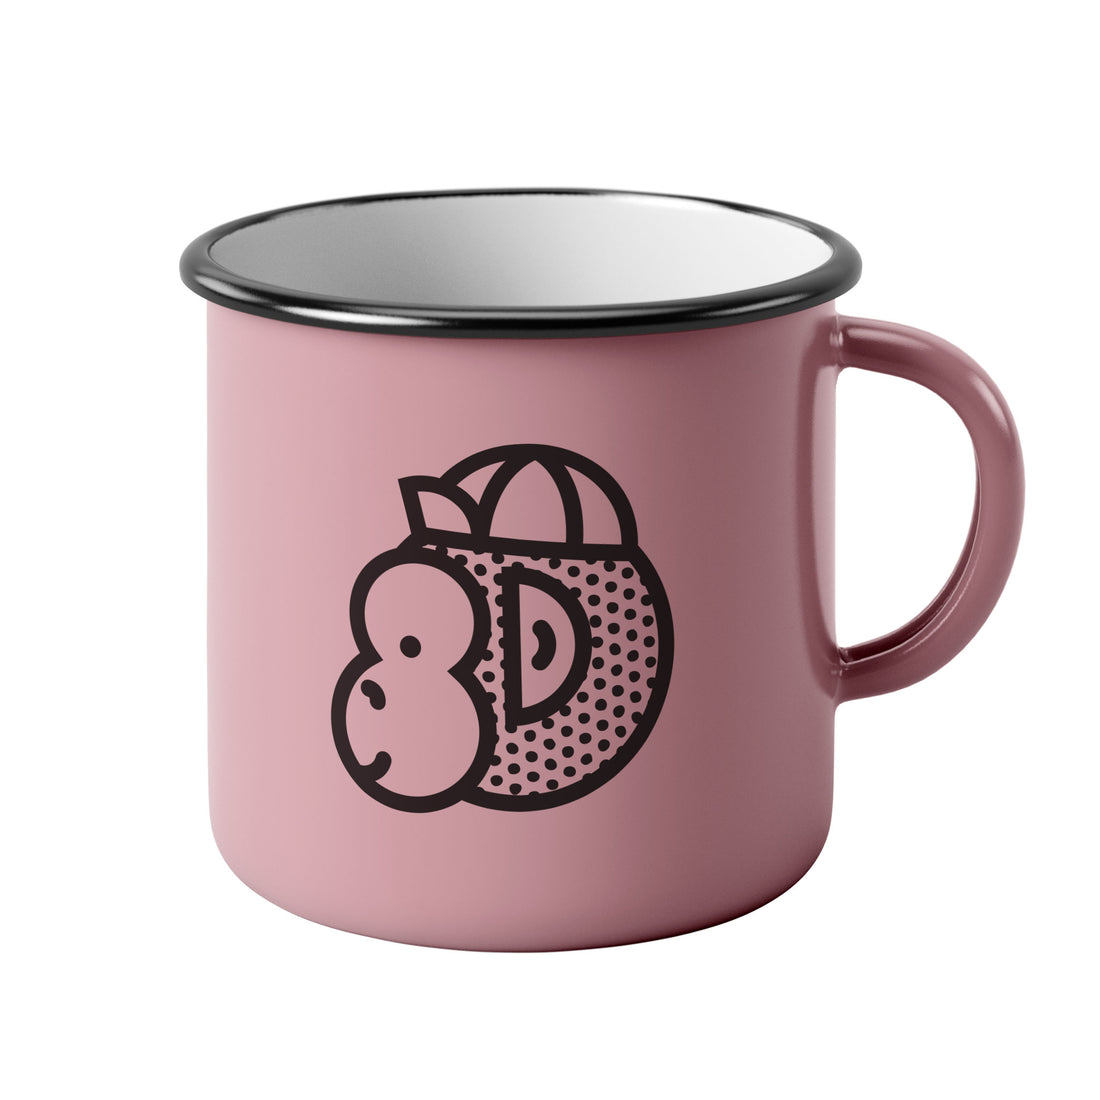 Victory Chimp Enamel Mug (Pink)